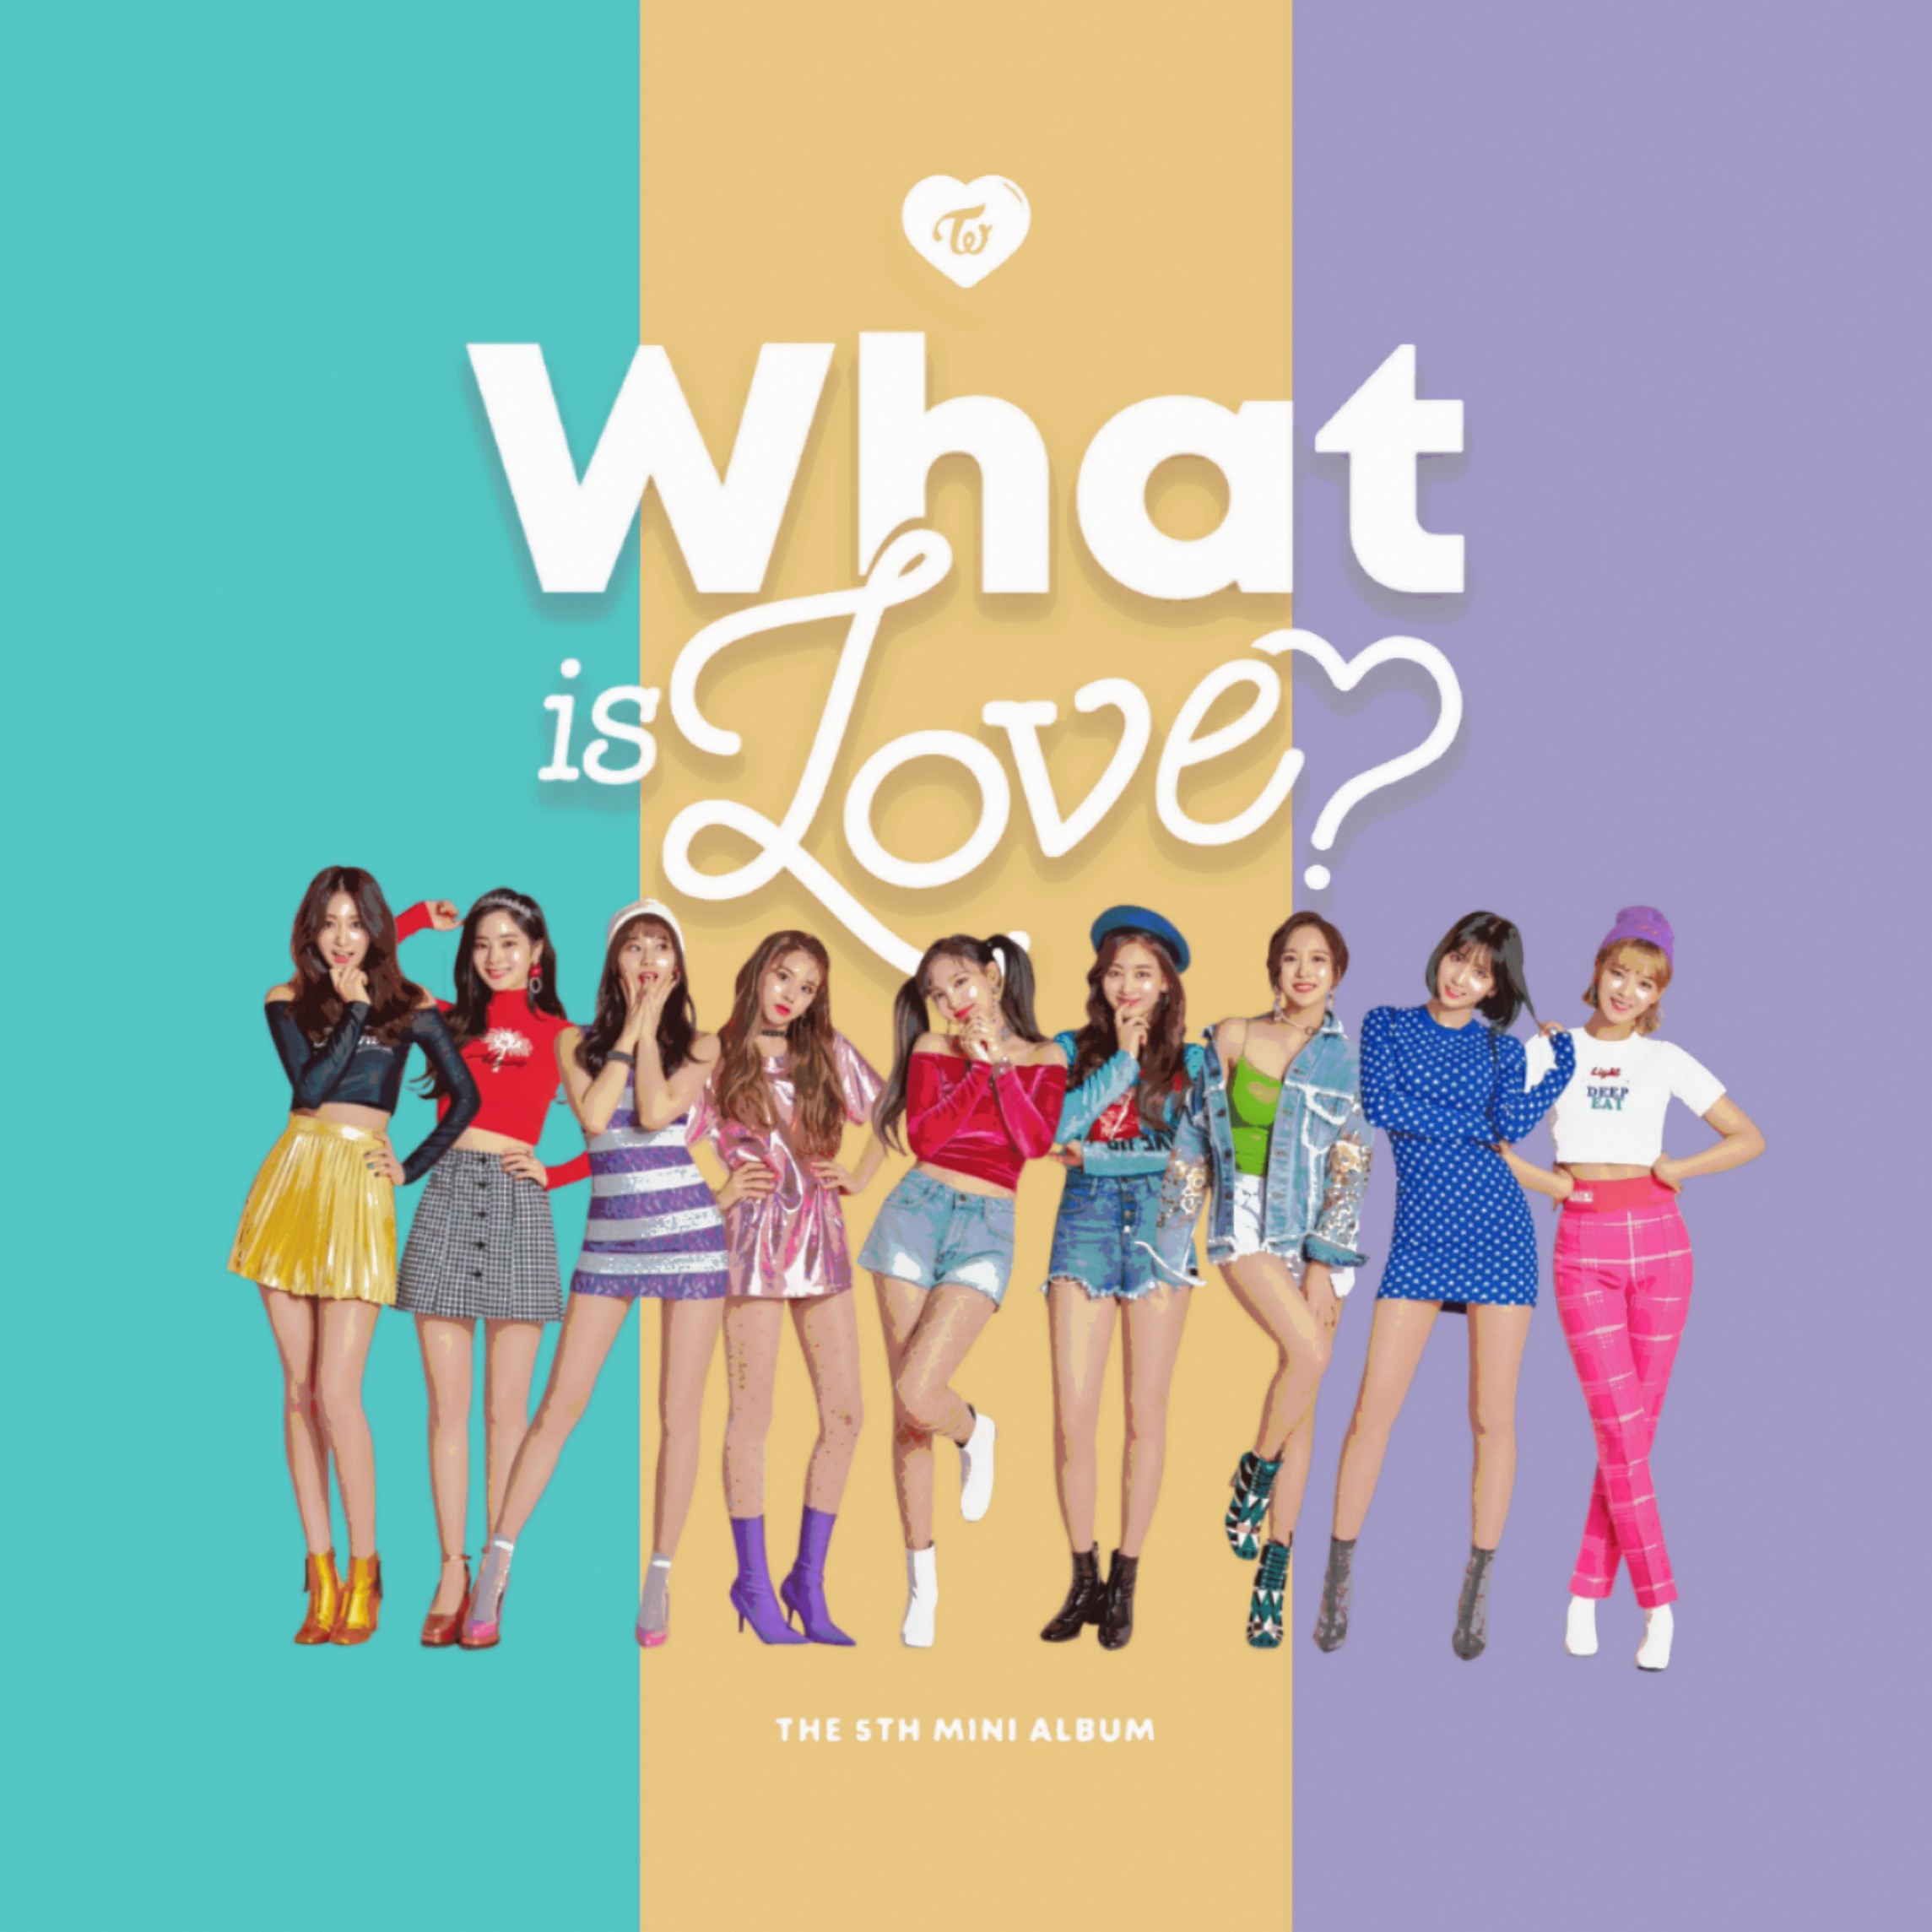 TWICE WHAT IS LOVE ? / 5TH MINI ALBUM album cover by LEAlbum on DeviantArt